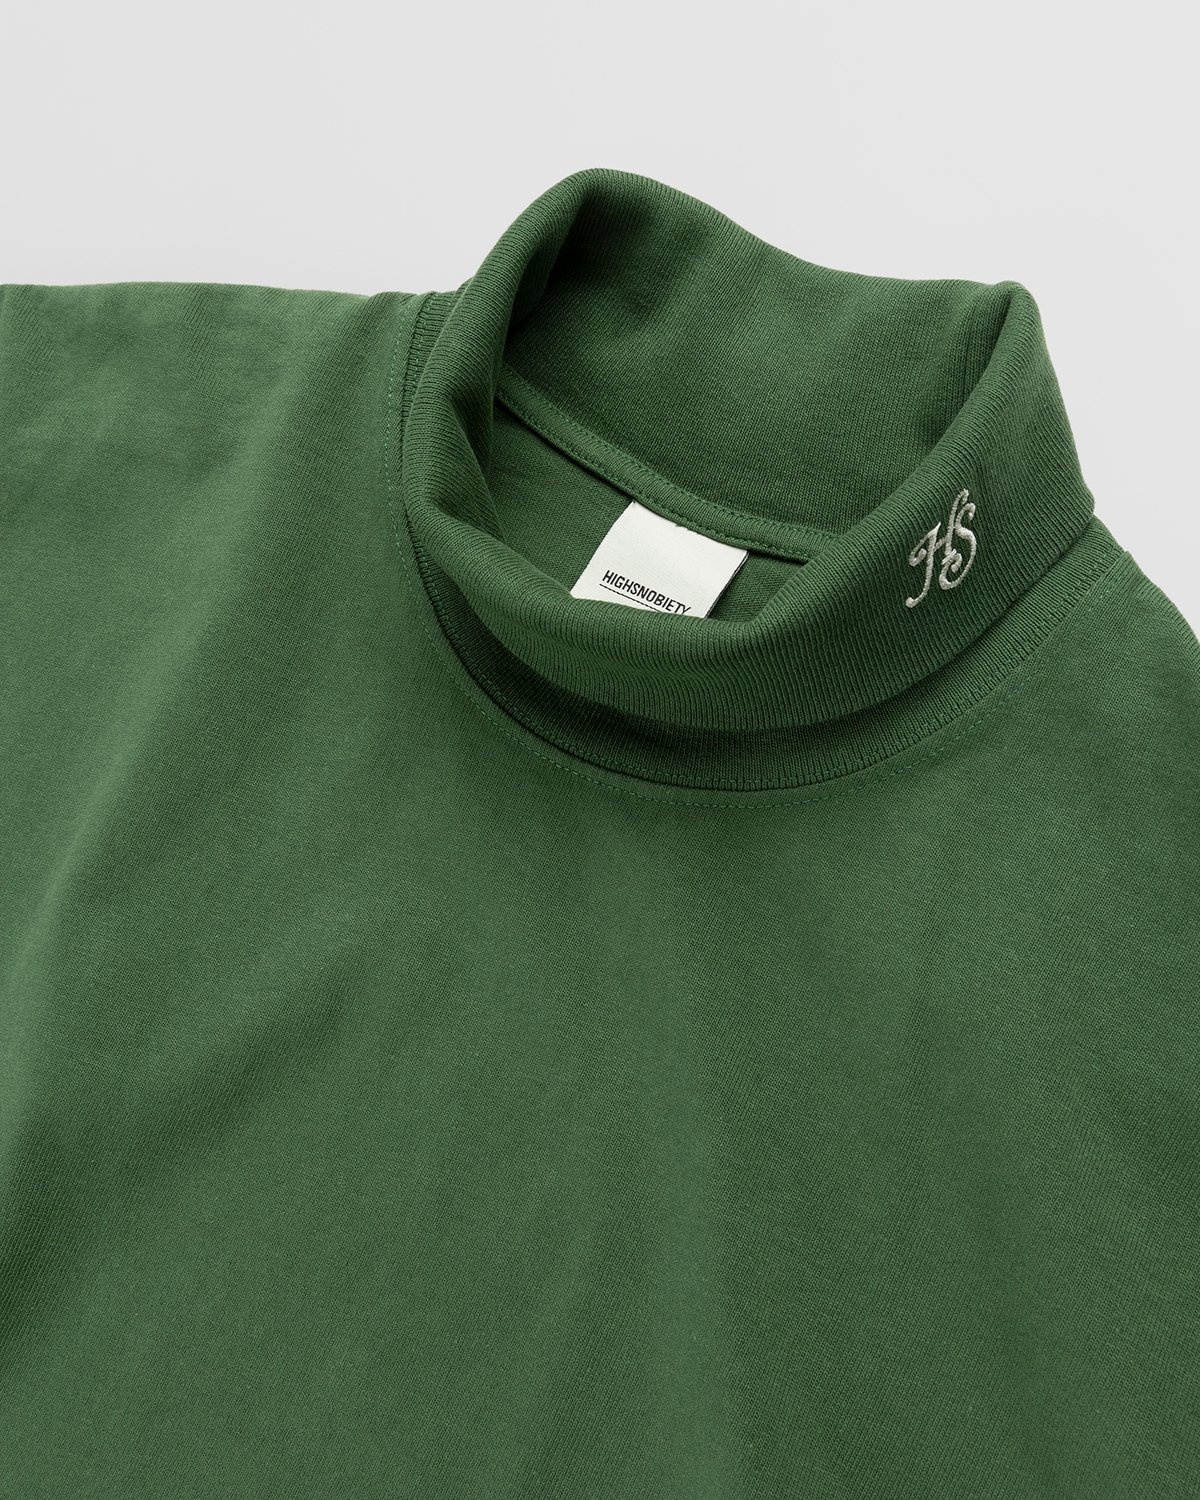 Highsnobiety – Heavy Staples Turtleneck Green - Sweatshirts - Green - Image 7